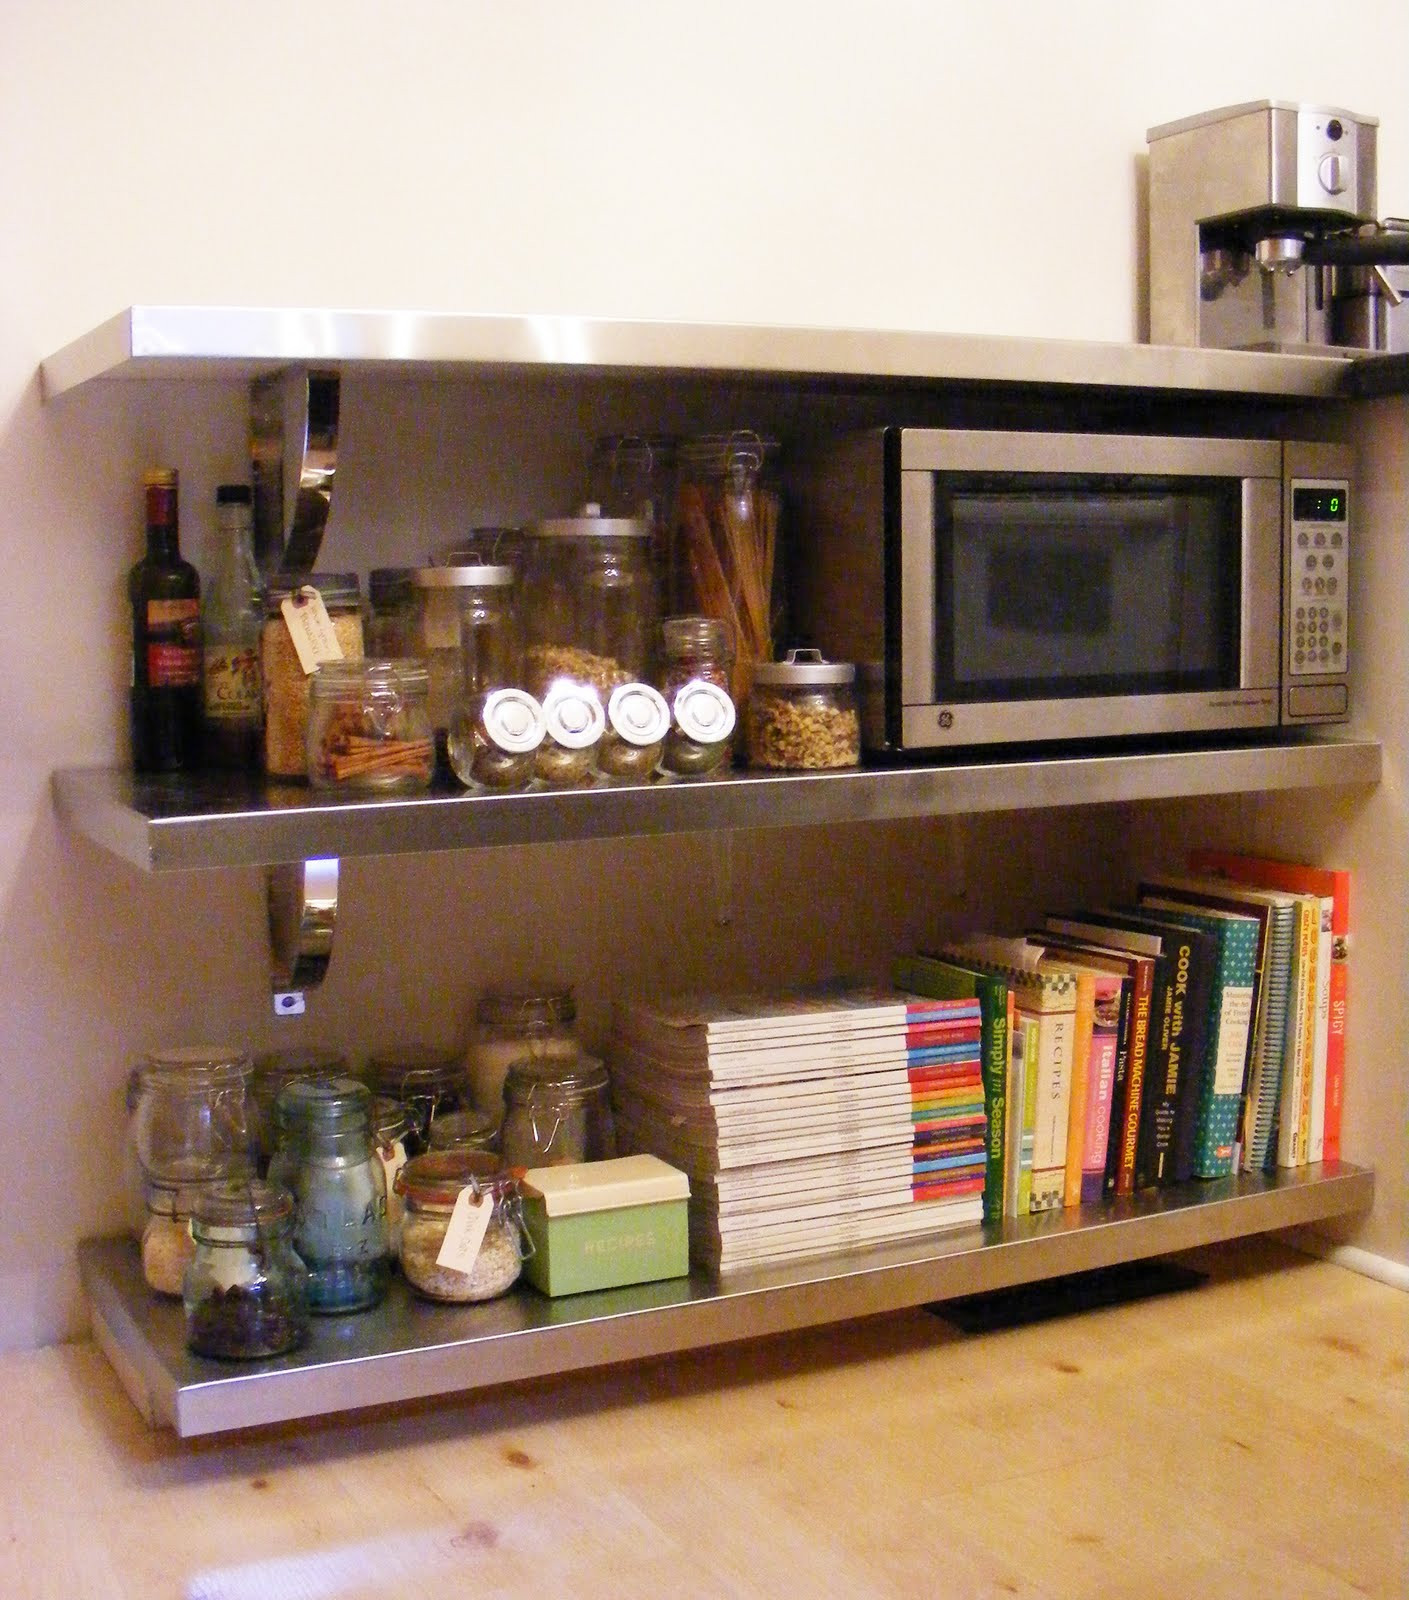 Best ideas about DIY Kitchen Shelf
. Save or Pin jenna rose journal kitchen renovation DIY stainless Now.